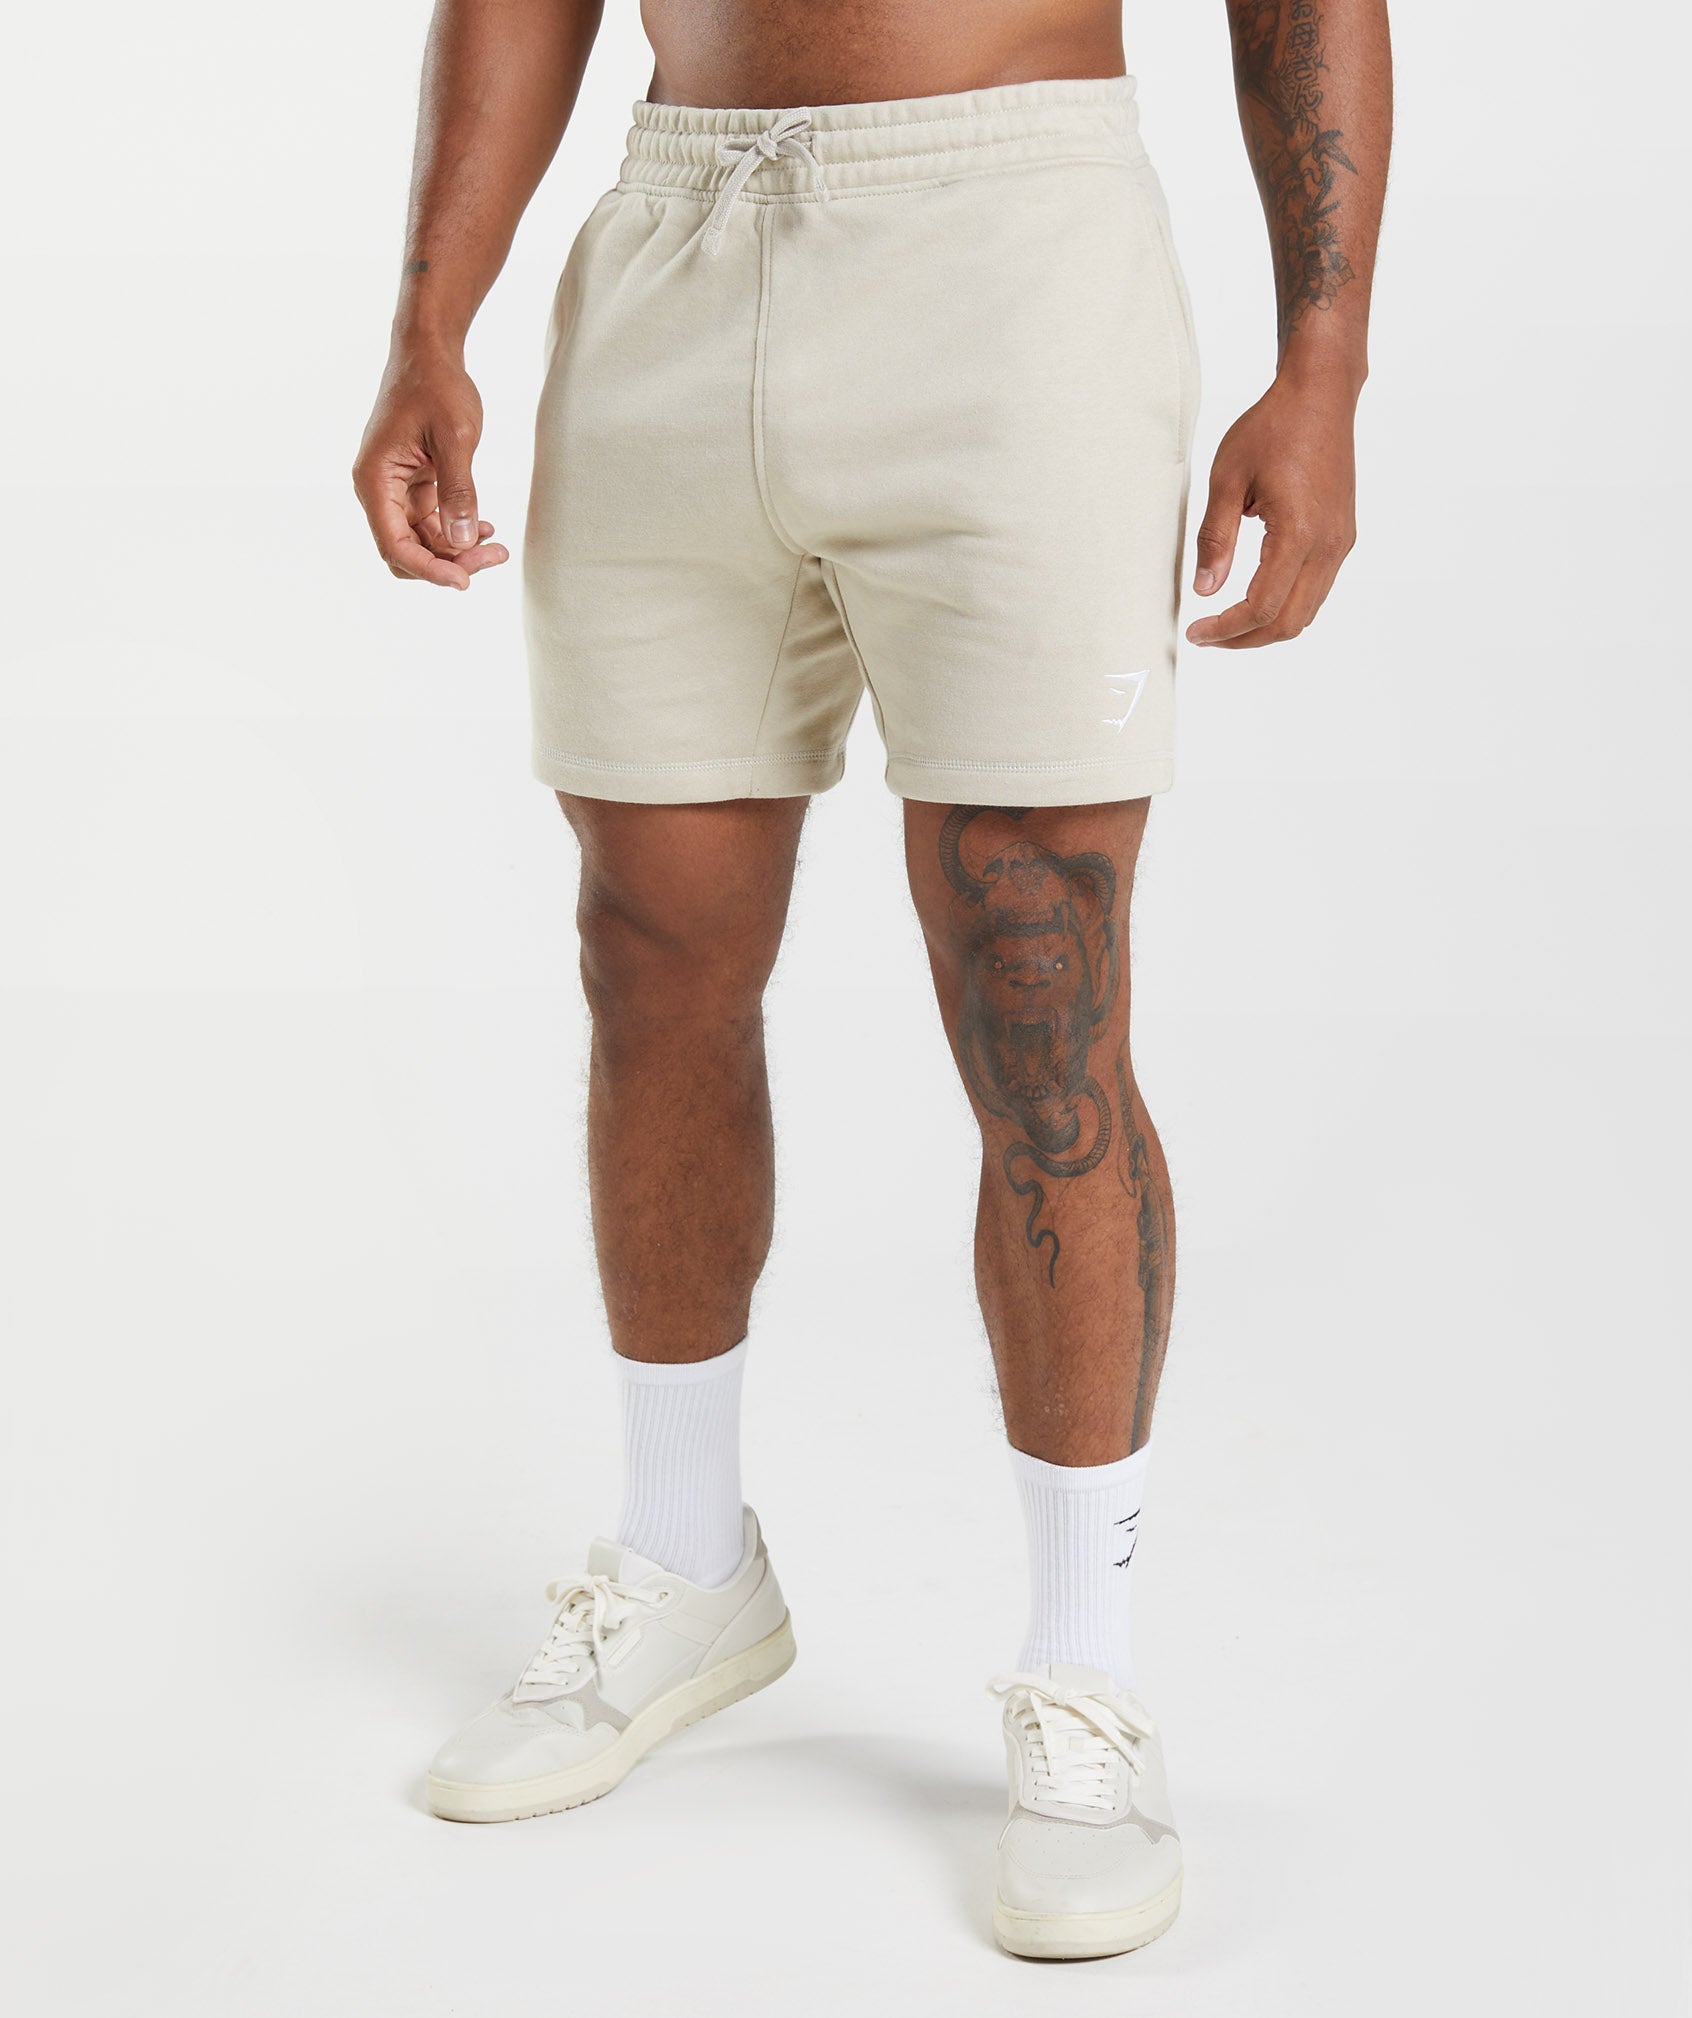 Gymshark Crest Shorts - Pebble Grey